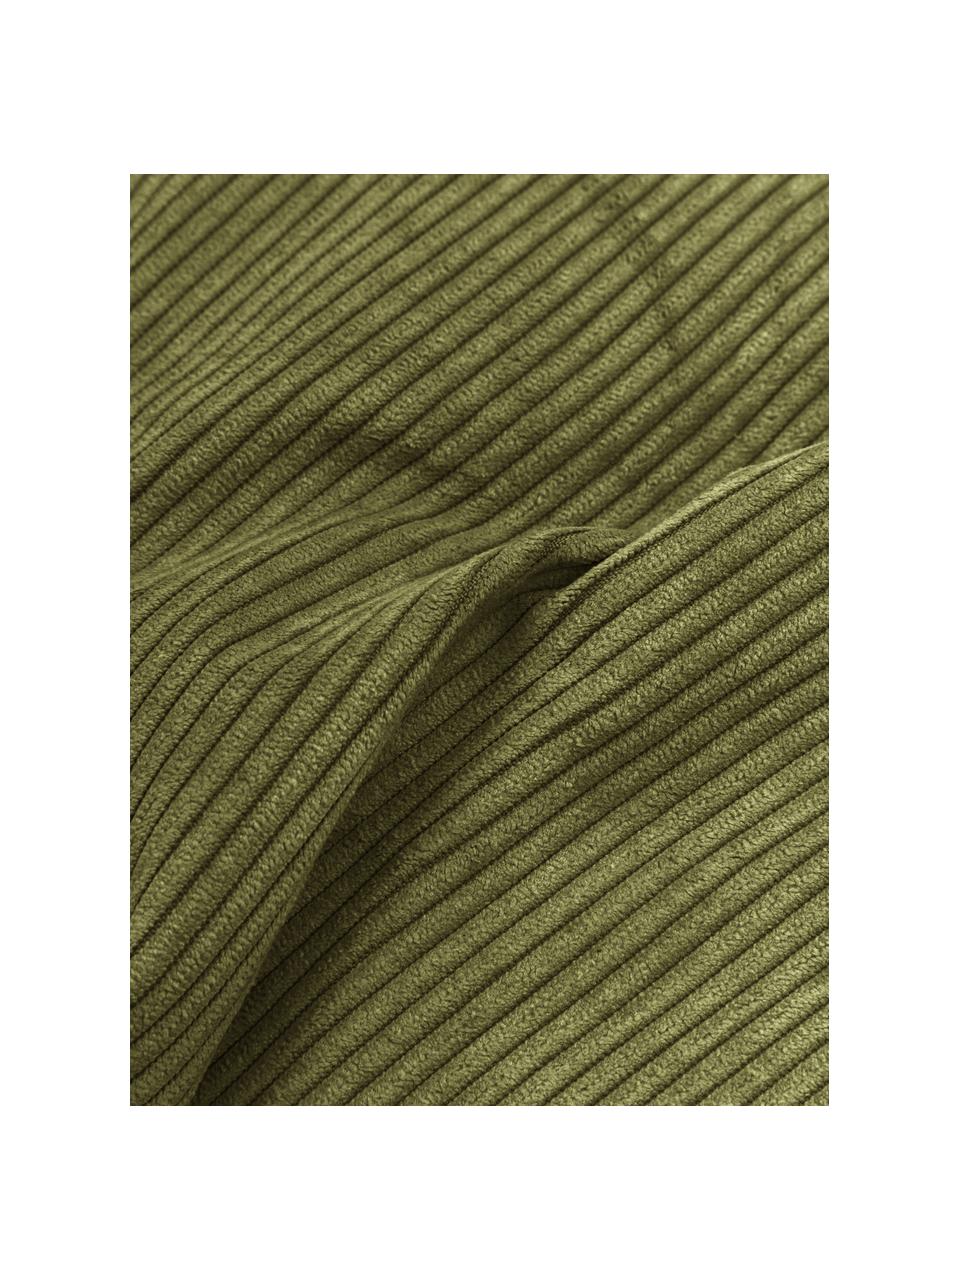 Cojín de pana para sofá Lennon, Tapizado: pana (92% poliéster, 8% p, Pana verde, An 60 x L 60 cm